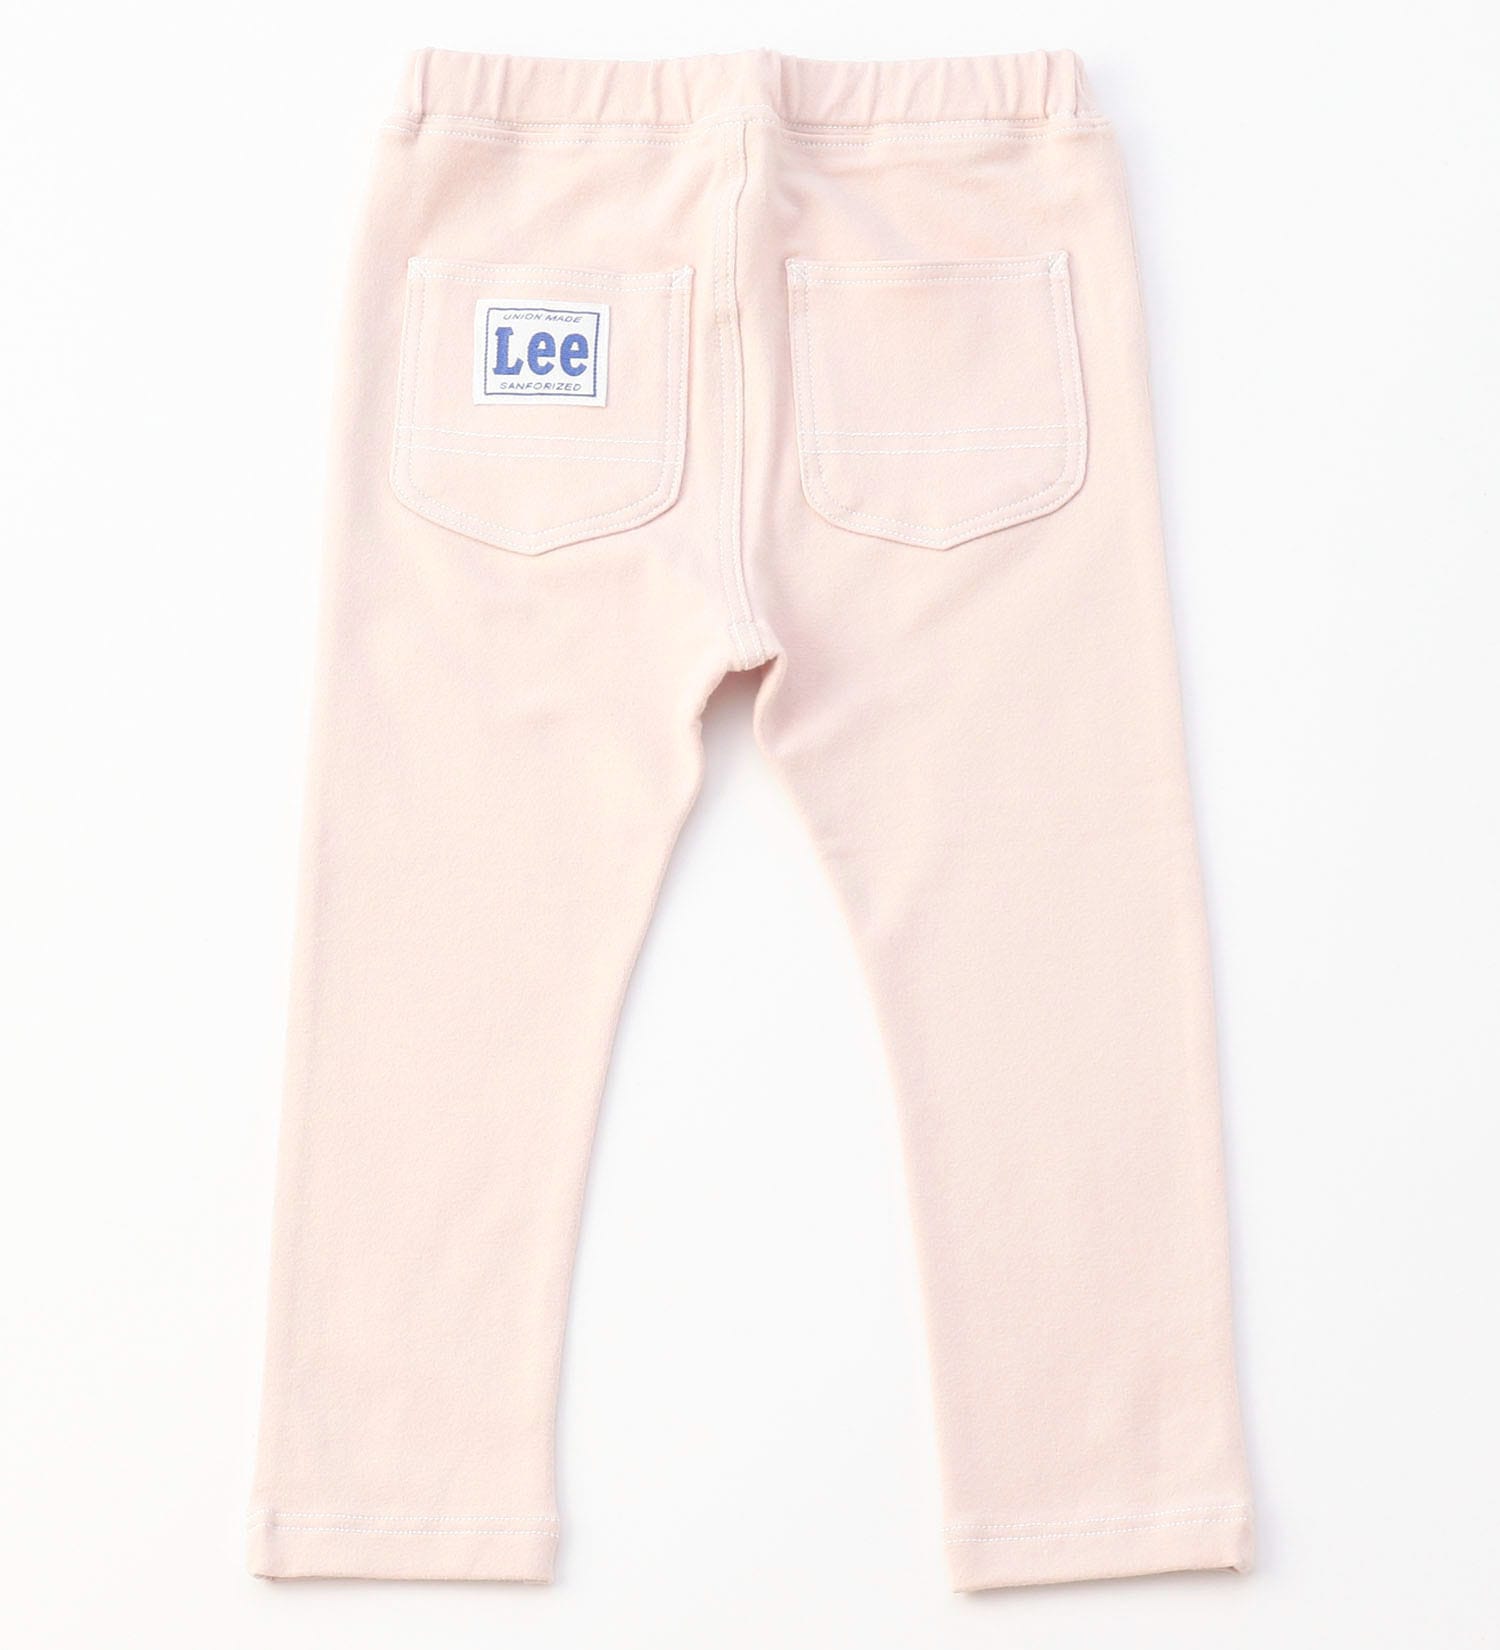 Lee(リー)の【70-100cm】ベビー 柔らかい穿き心地のレギンス|パンツ/パンツ/キッズ|ピンク